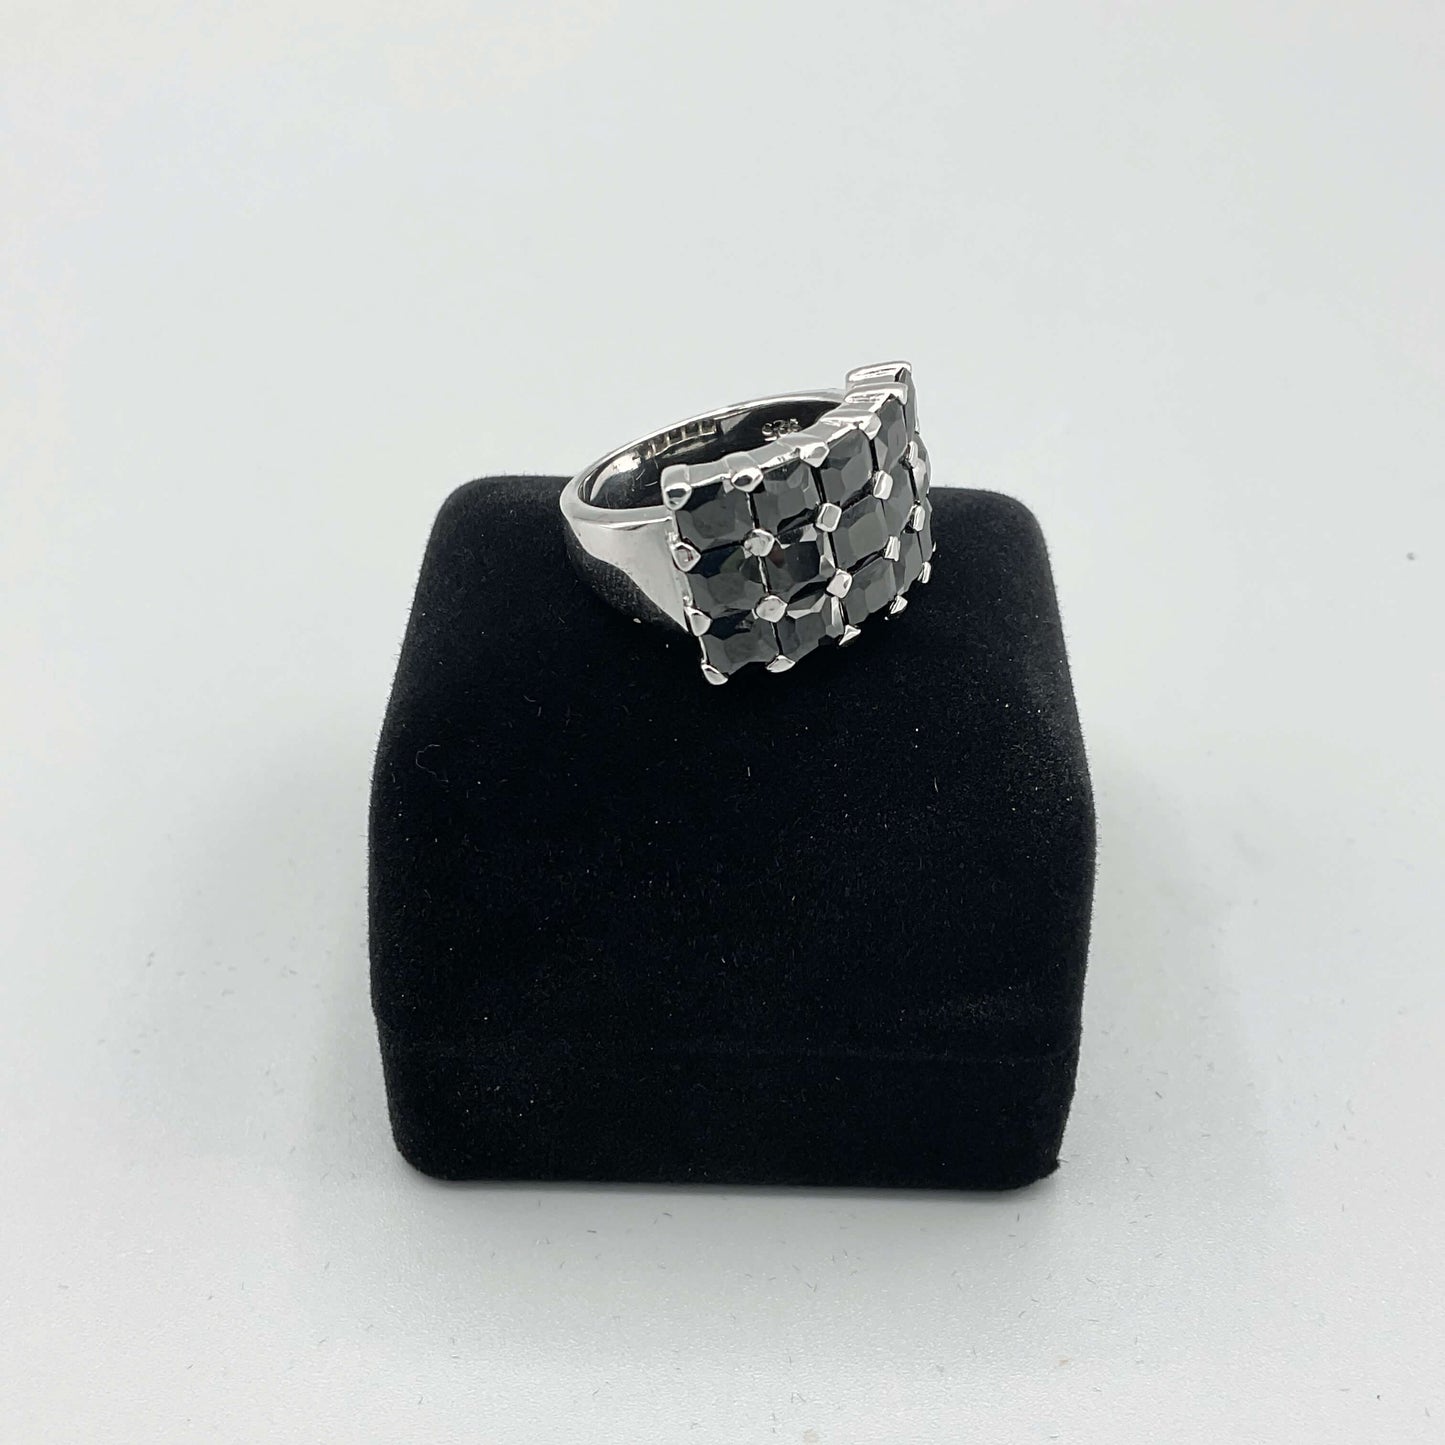 Black Cubic Zirconia Silver Ring